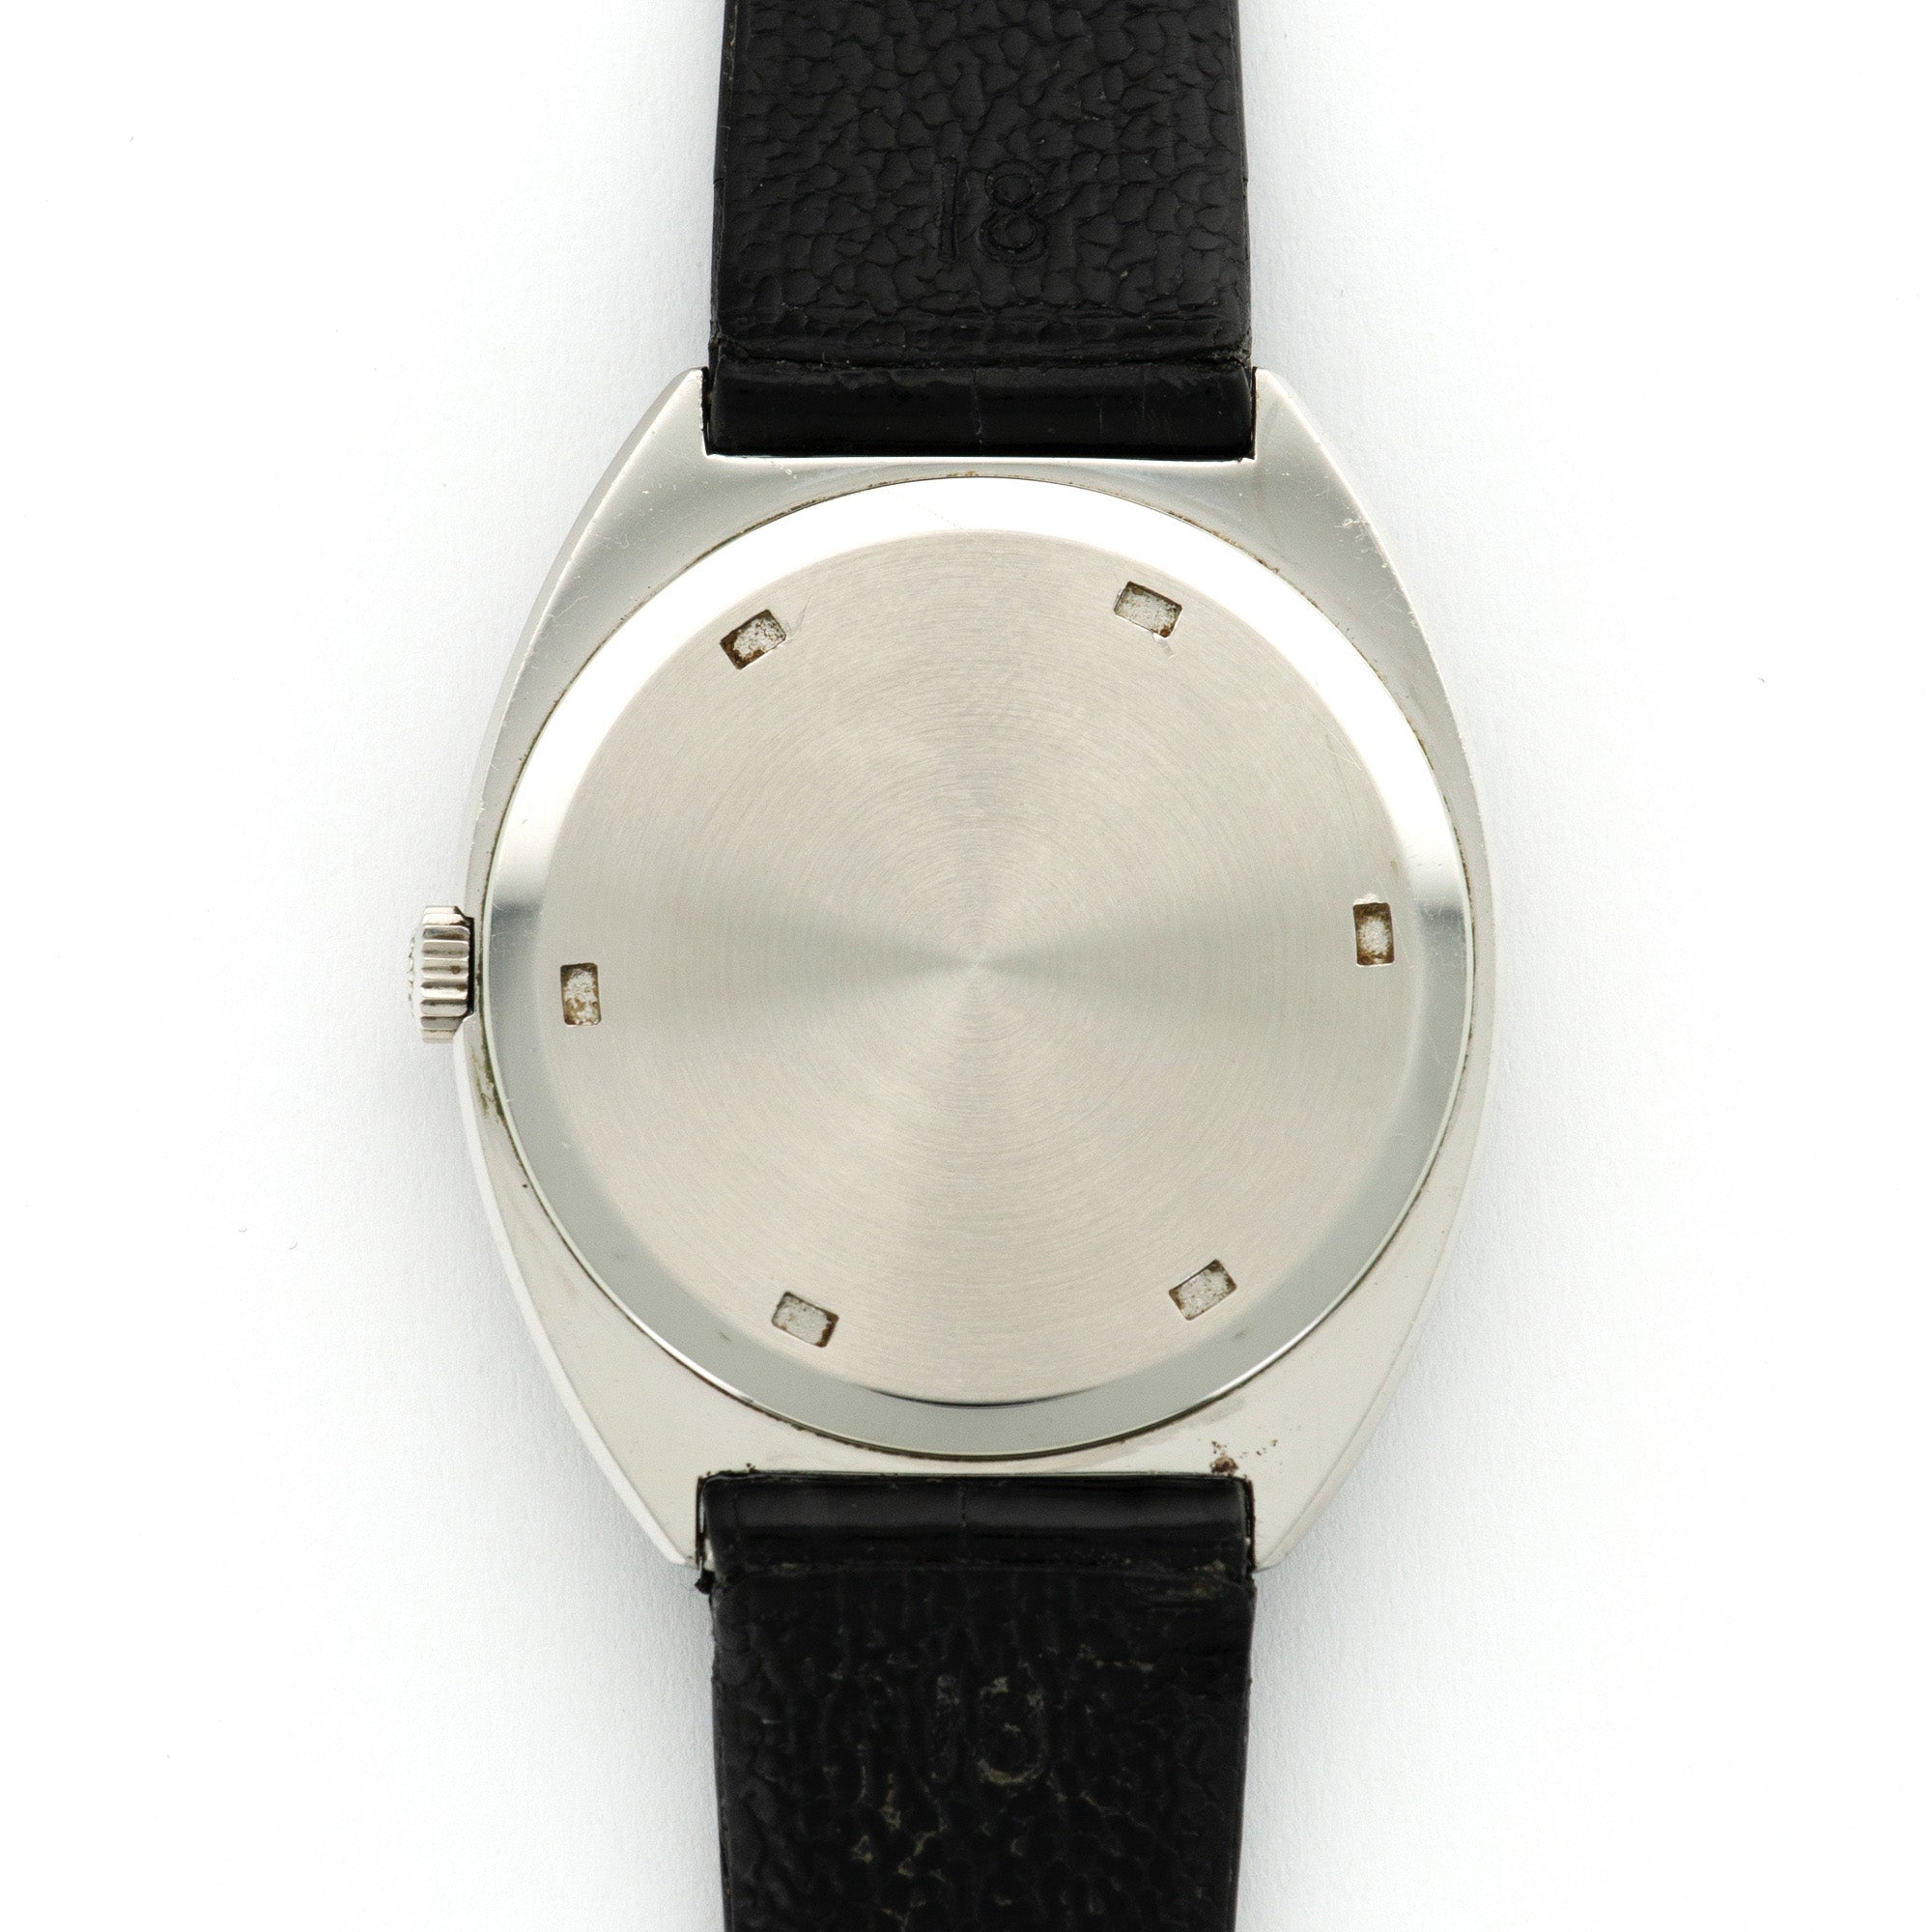 Patek Philippe - Patek Philippe Steel Watch Ref. Ref. 3574 - The Keystone Watches